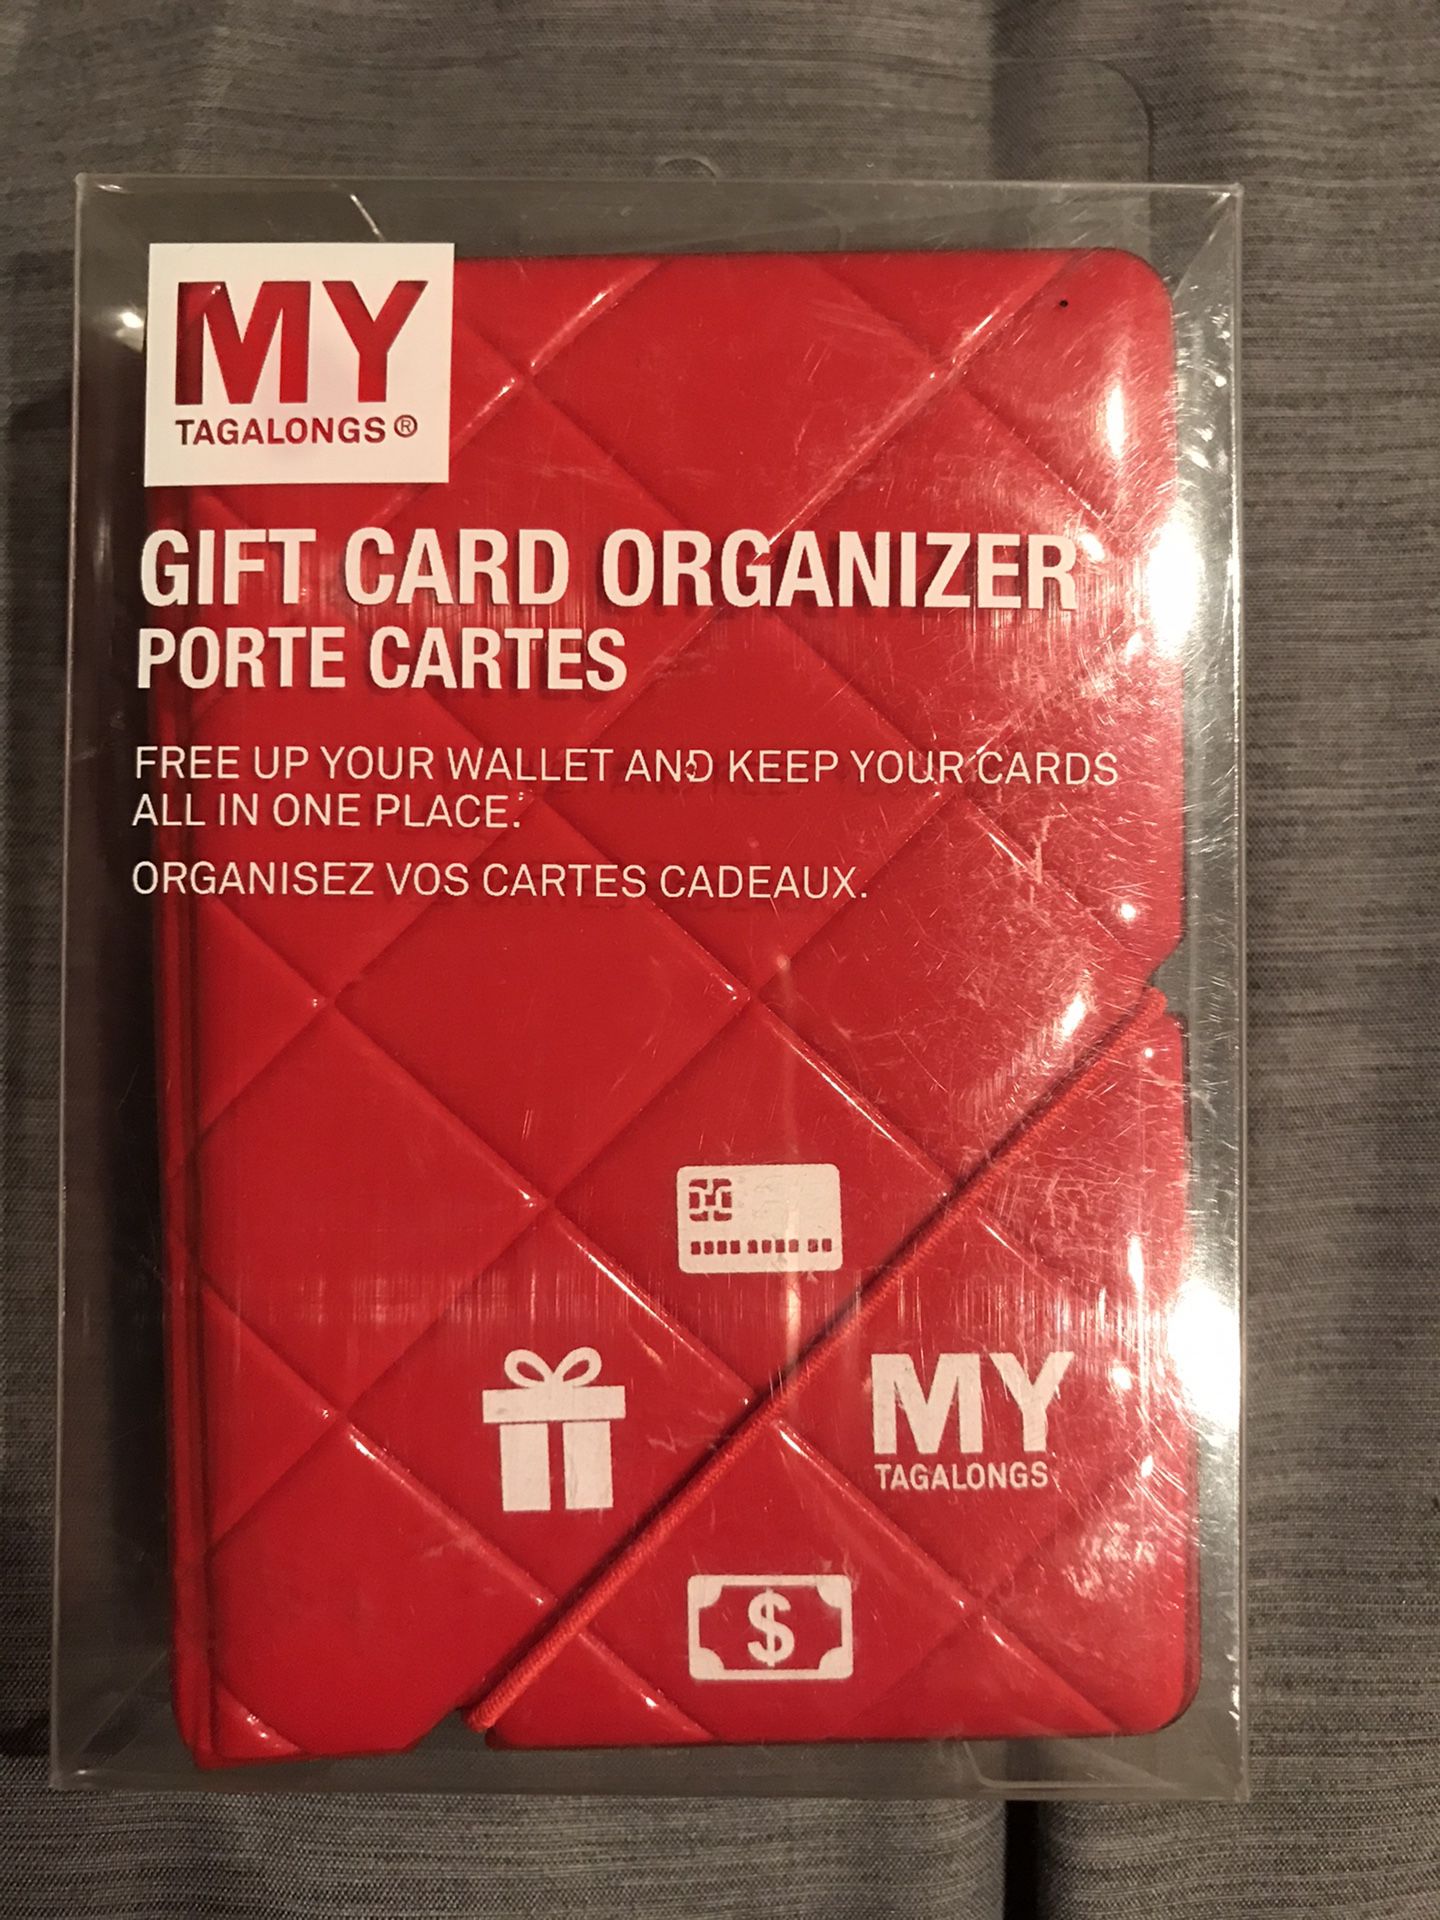 Brand new Gift card organizer